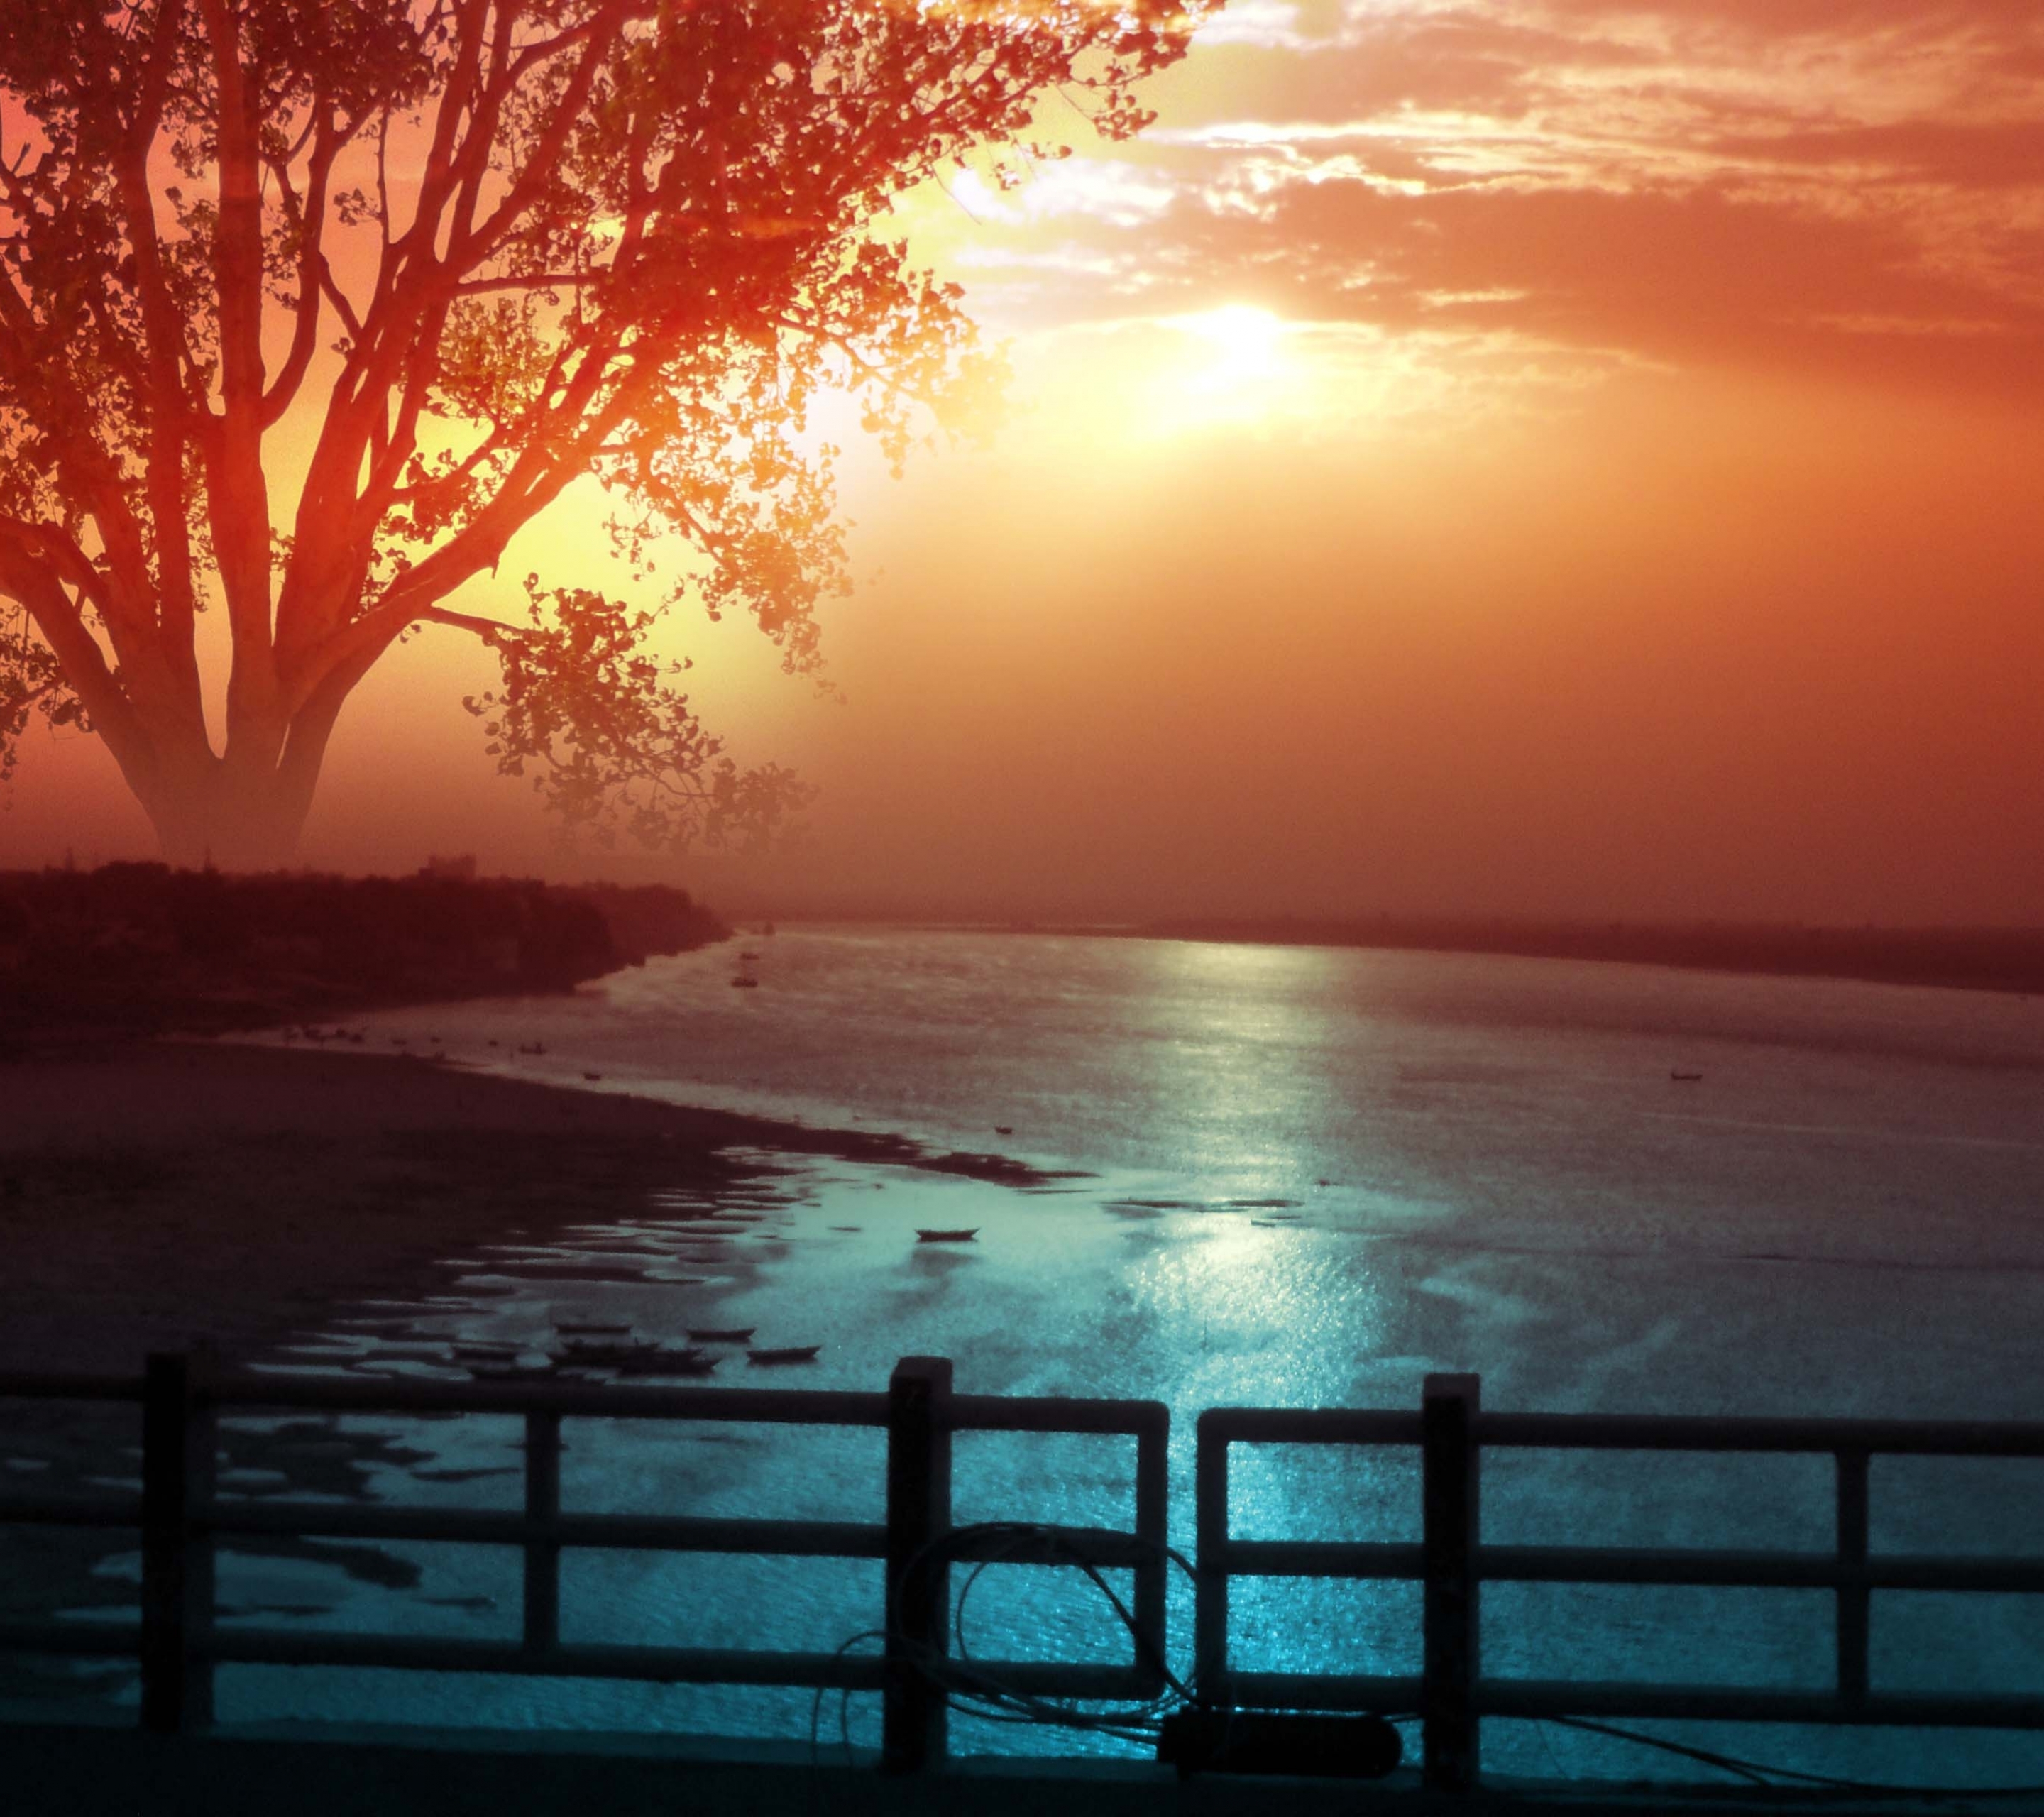 PC Wallpaper 4K - Enchanting Ocean Sunset: A Colorful Fantasy